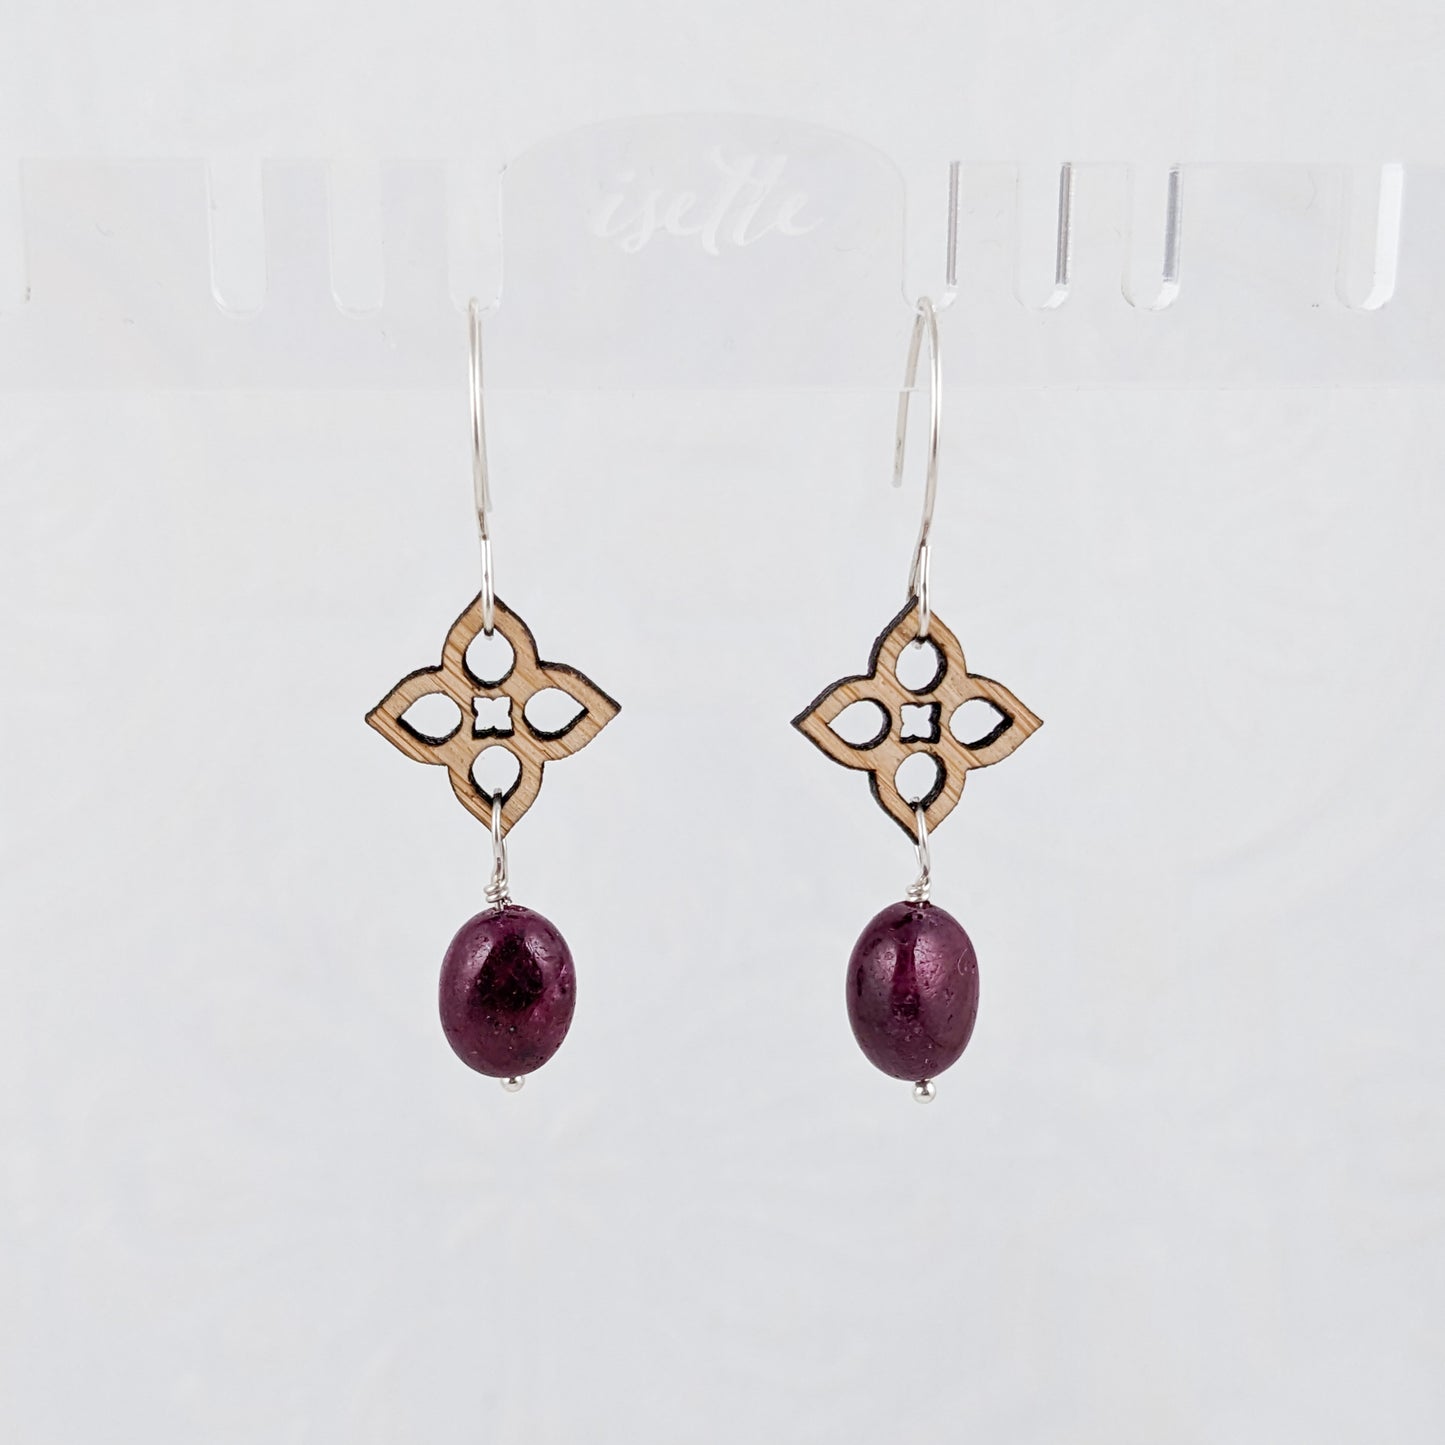 Quadrillium Earrings with Rubies